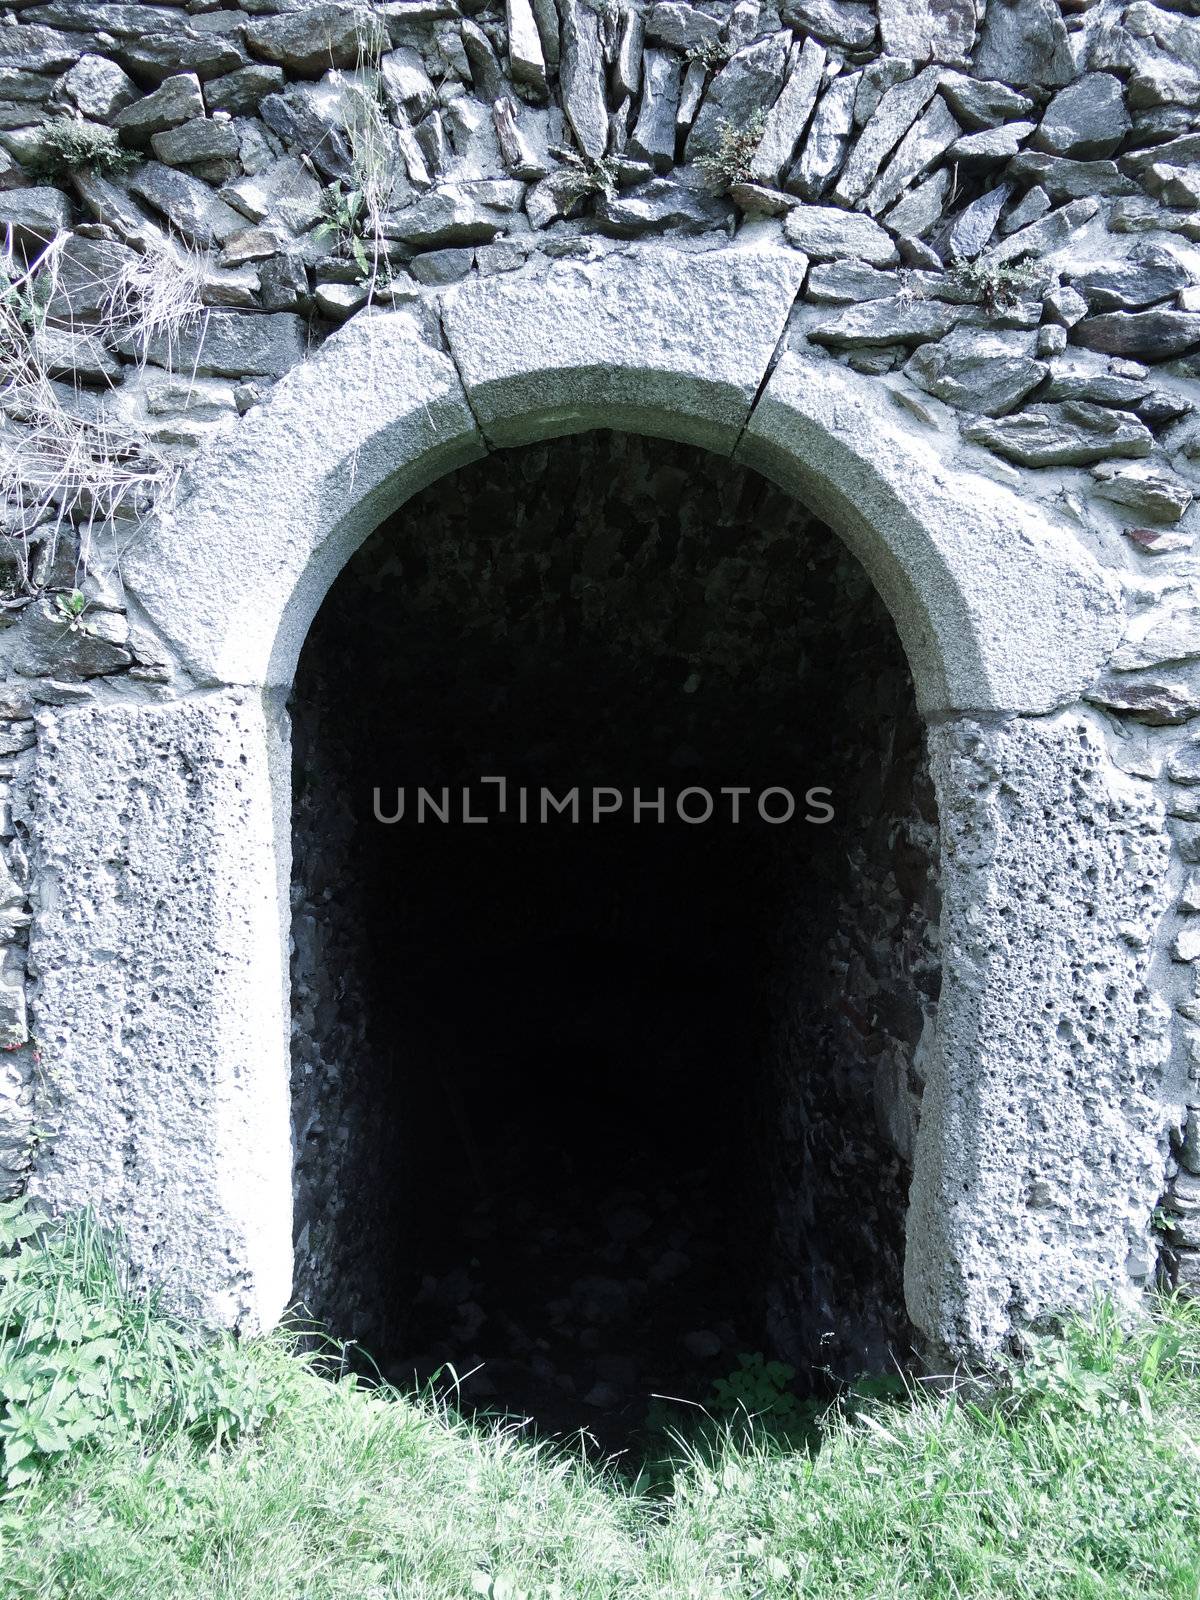 Door at Castle Ruin Schaunburg, located in Austria